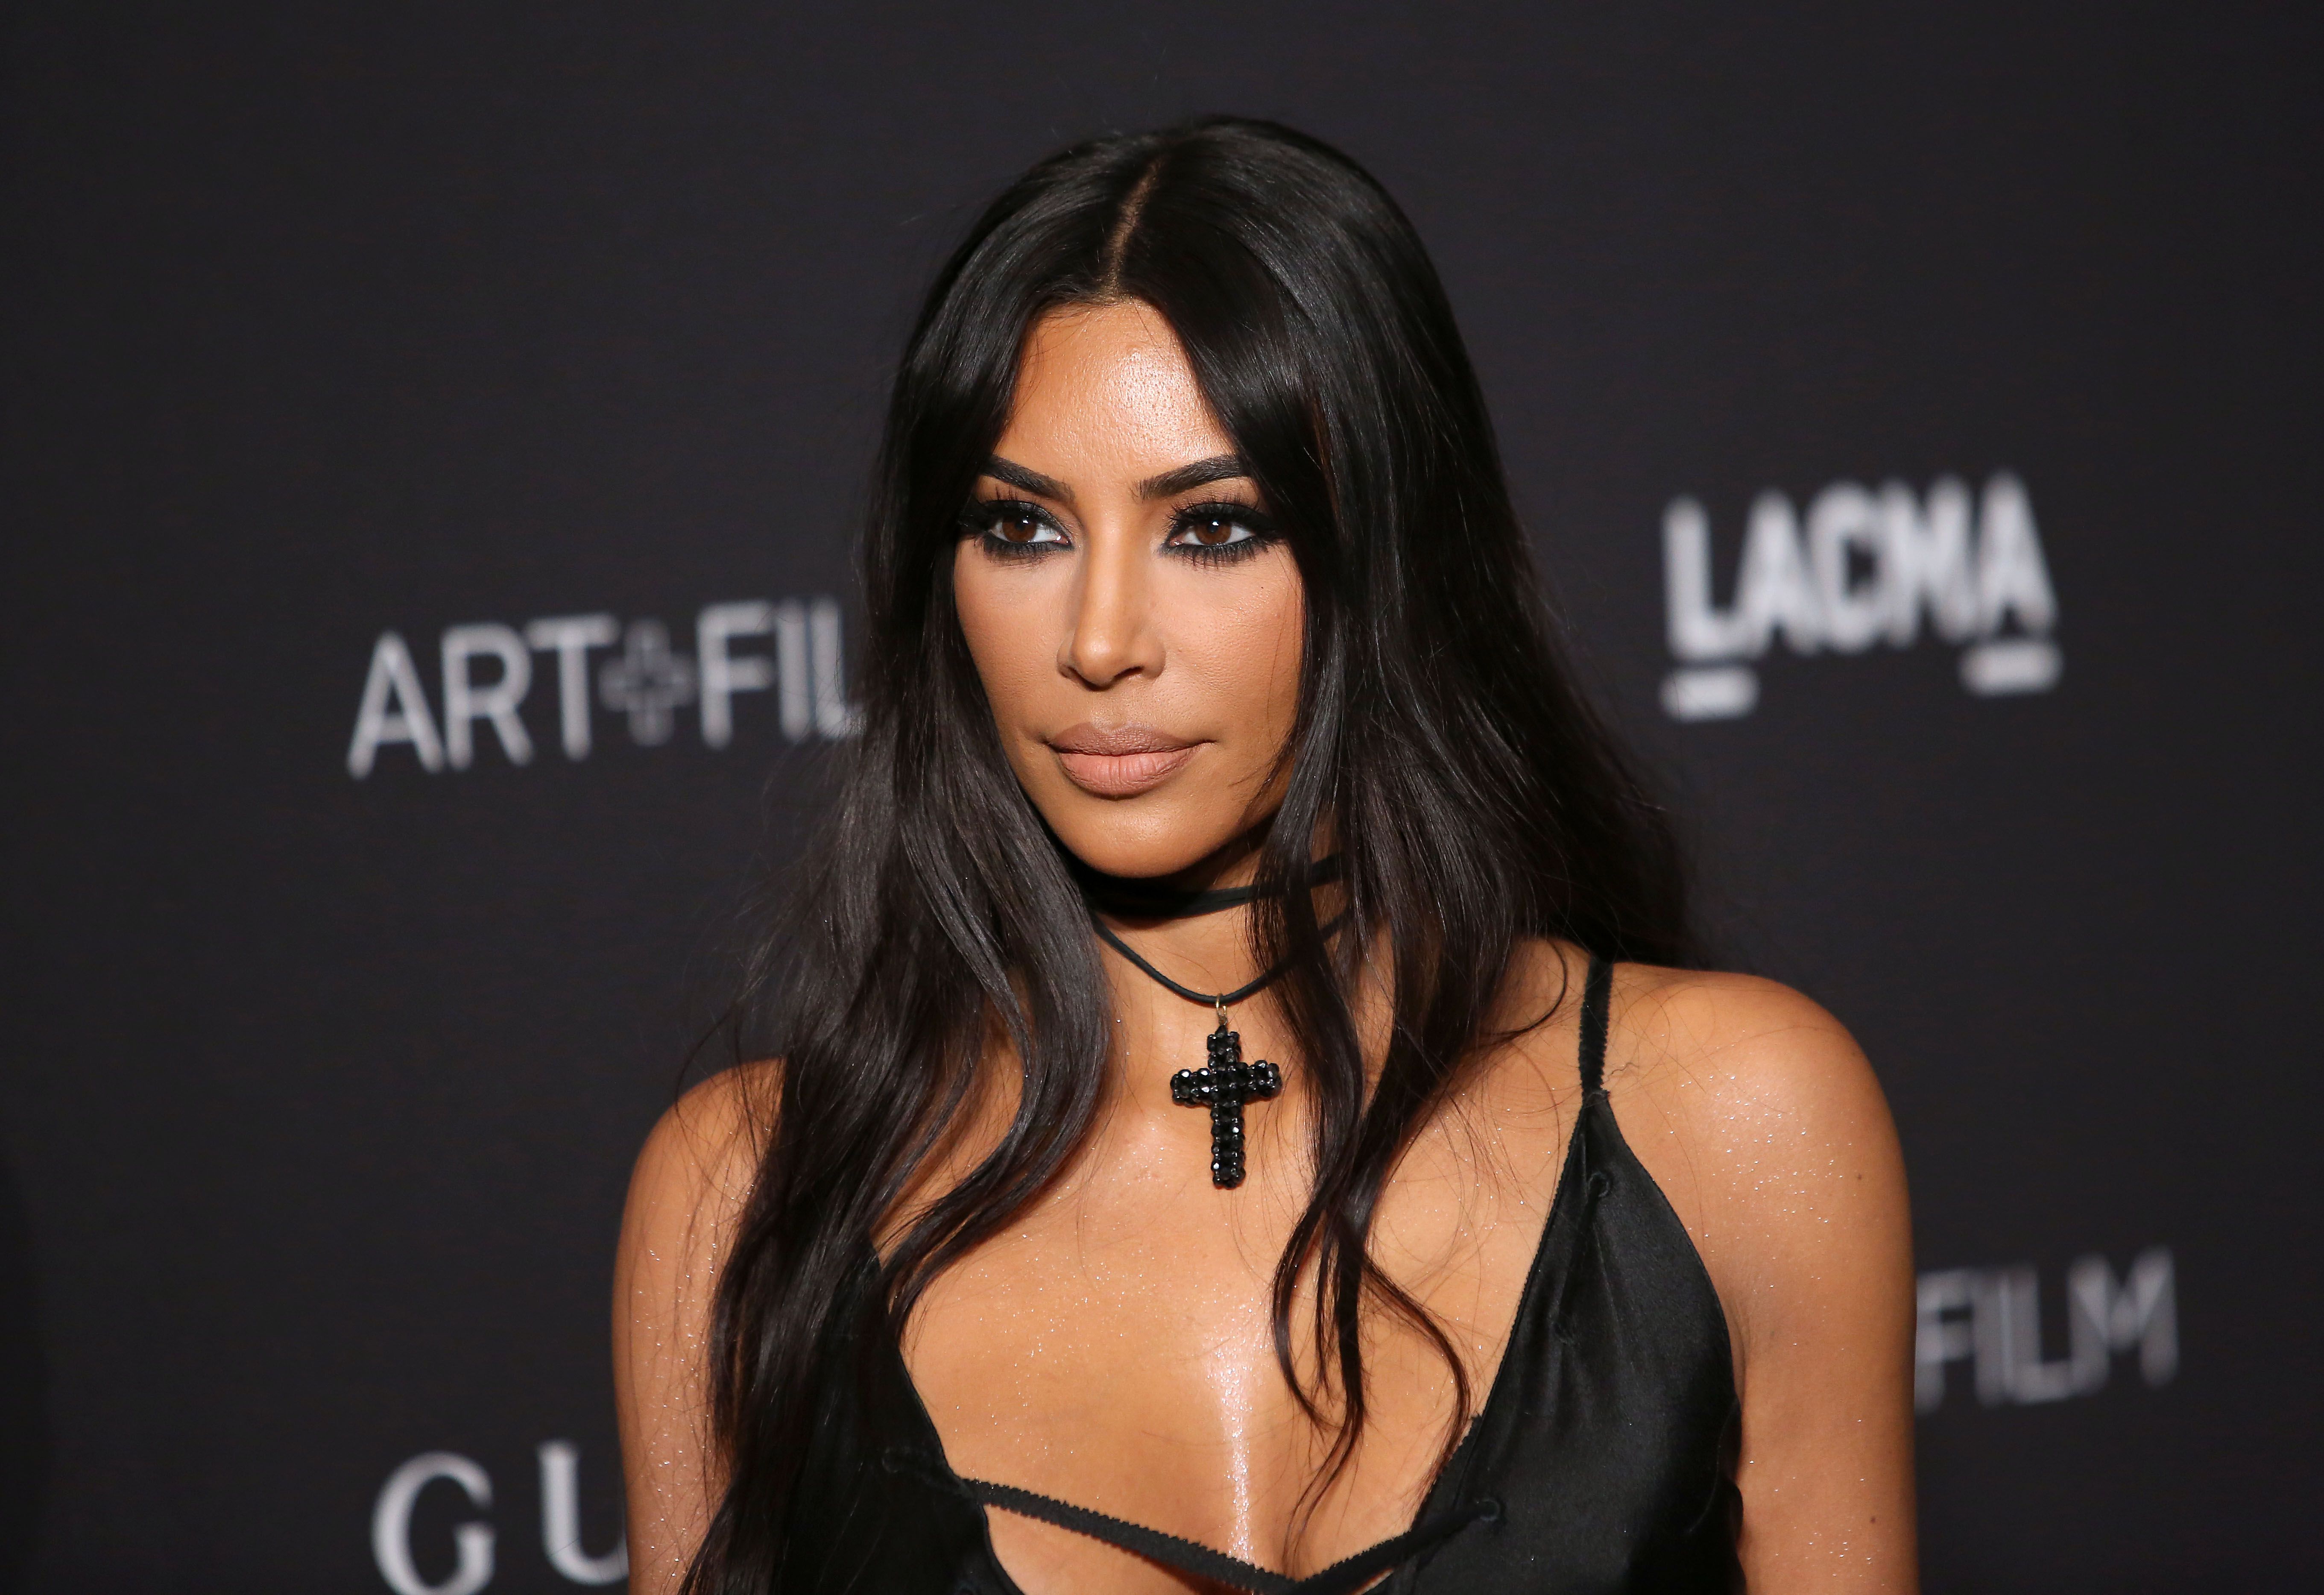 Kim Kardashian Returns to Paris for First Time Since Robbery